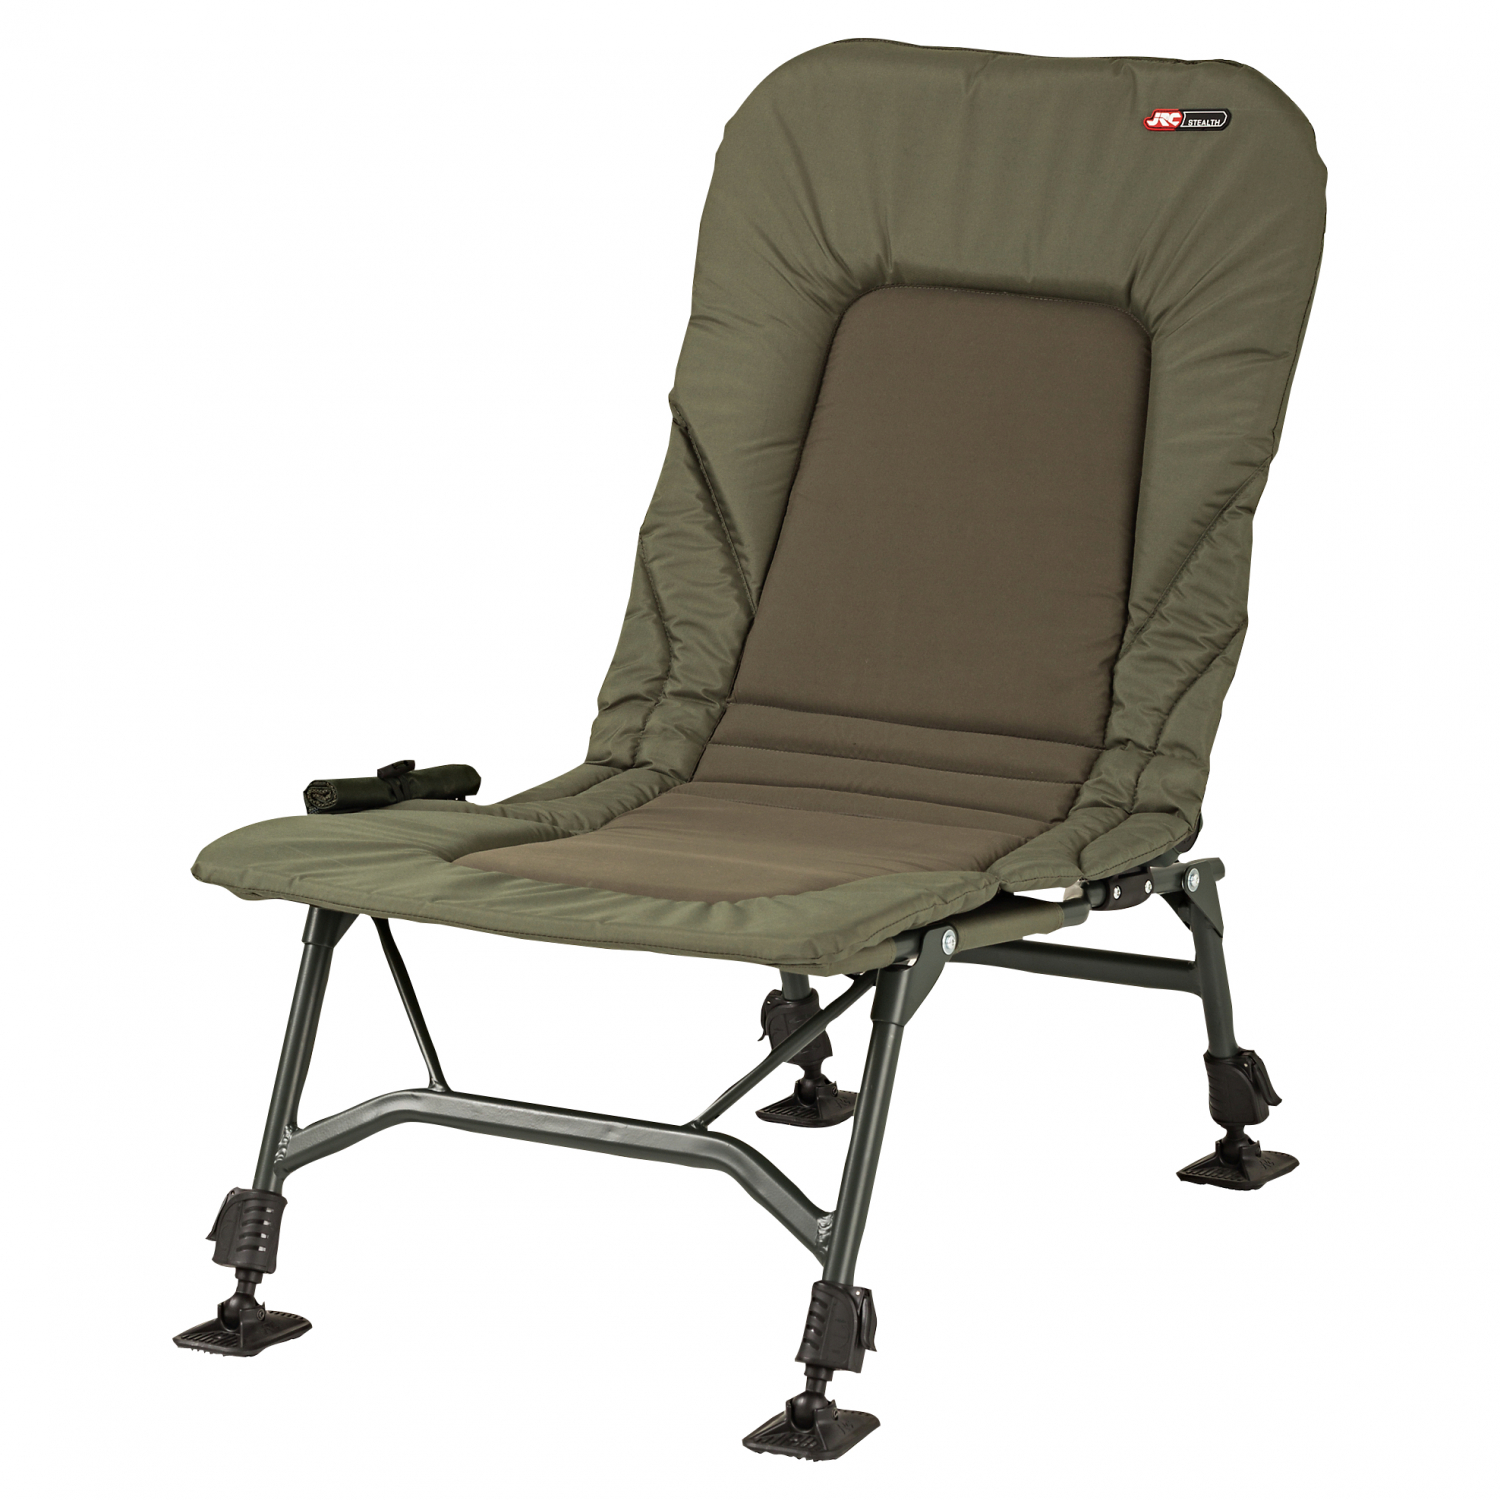 https://images.askari-sport.com/en/product/1/large/jrc-chair-stealth-recliner.jpg